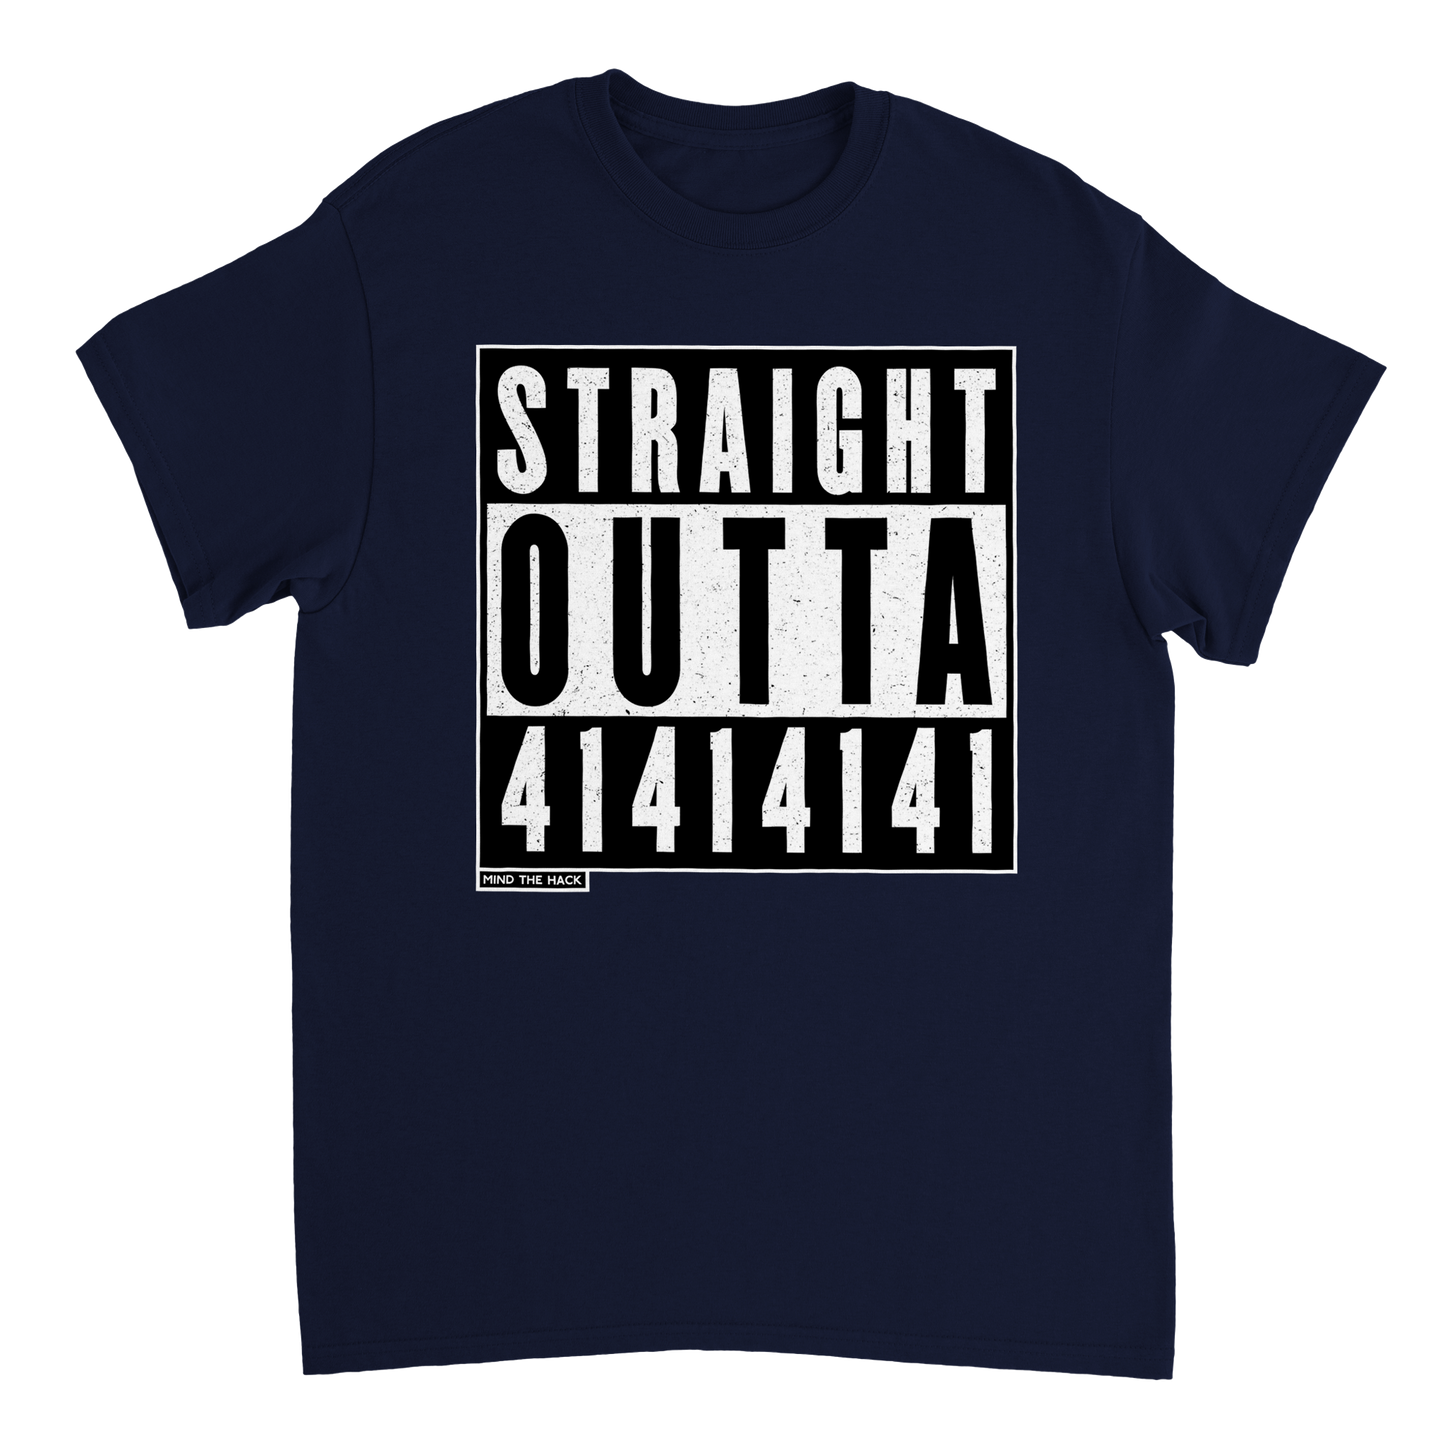 Straight outta 41414141 Unisex T-Shirt